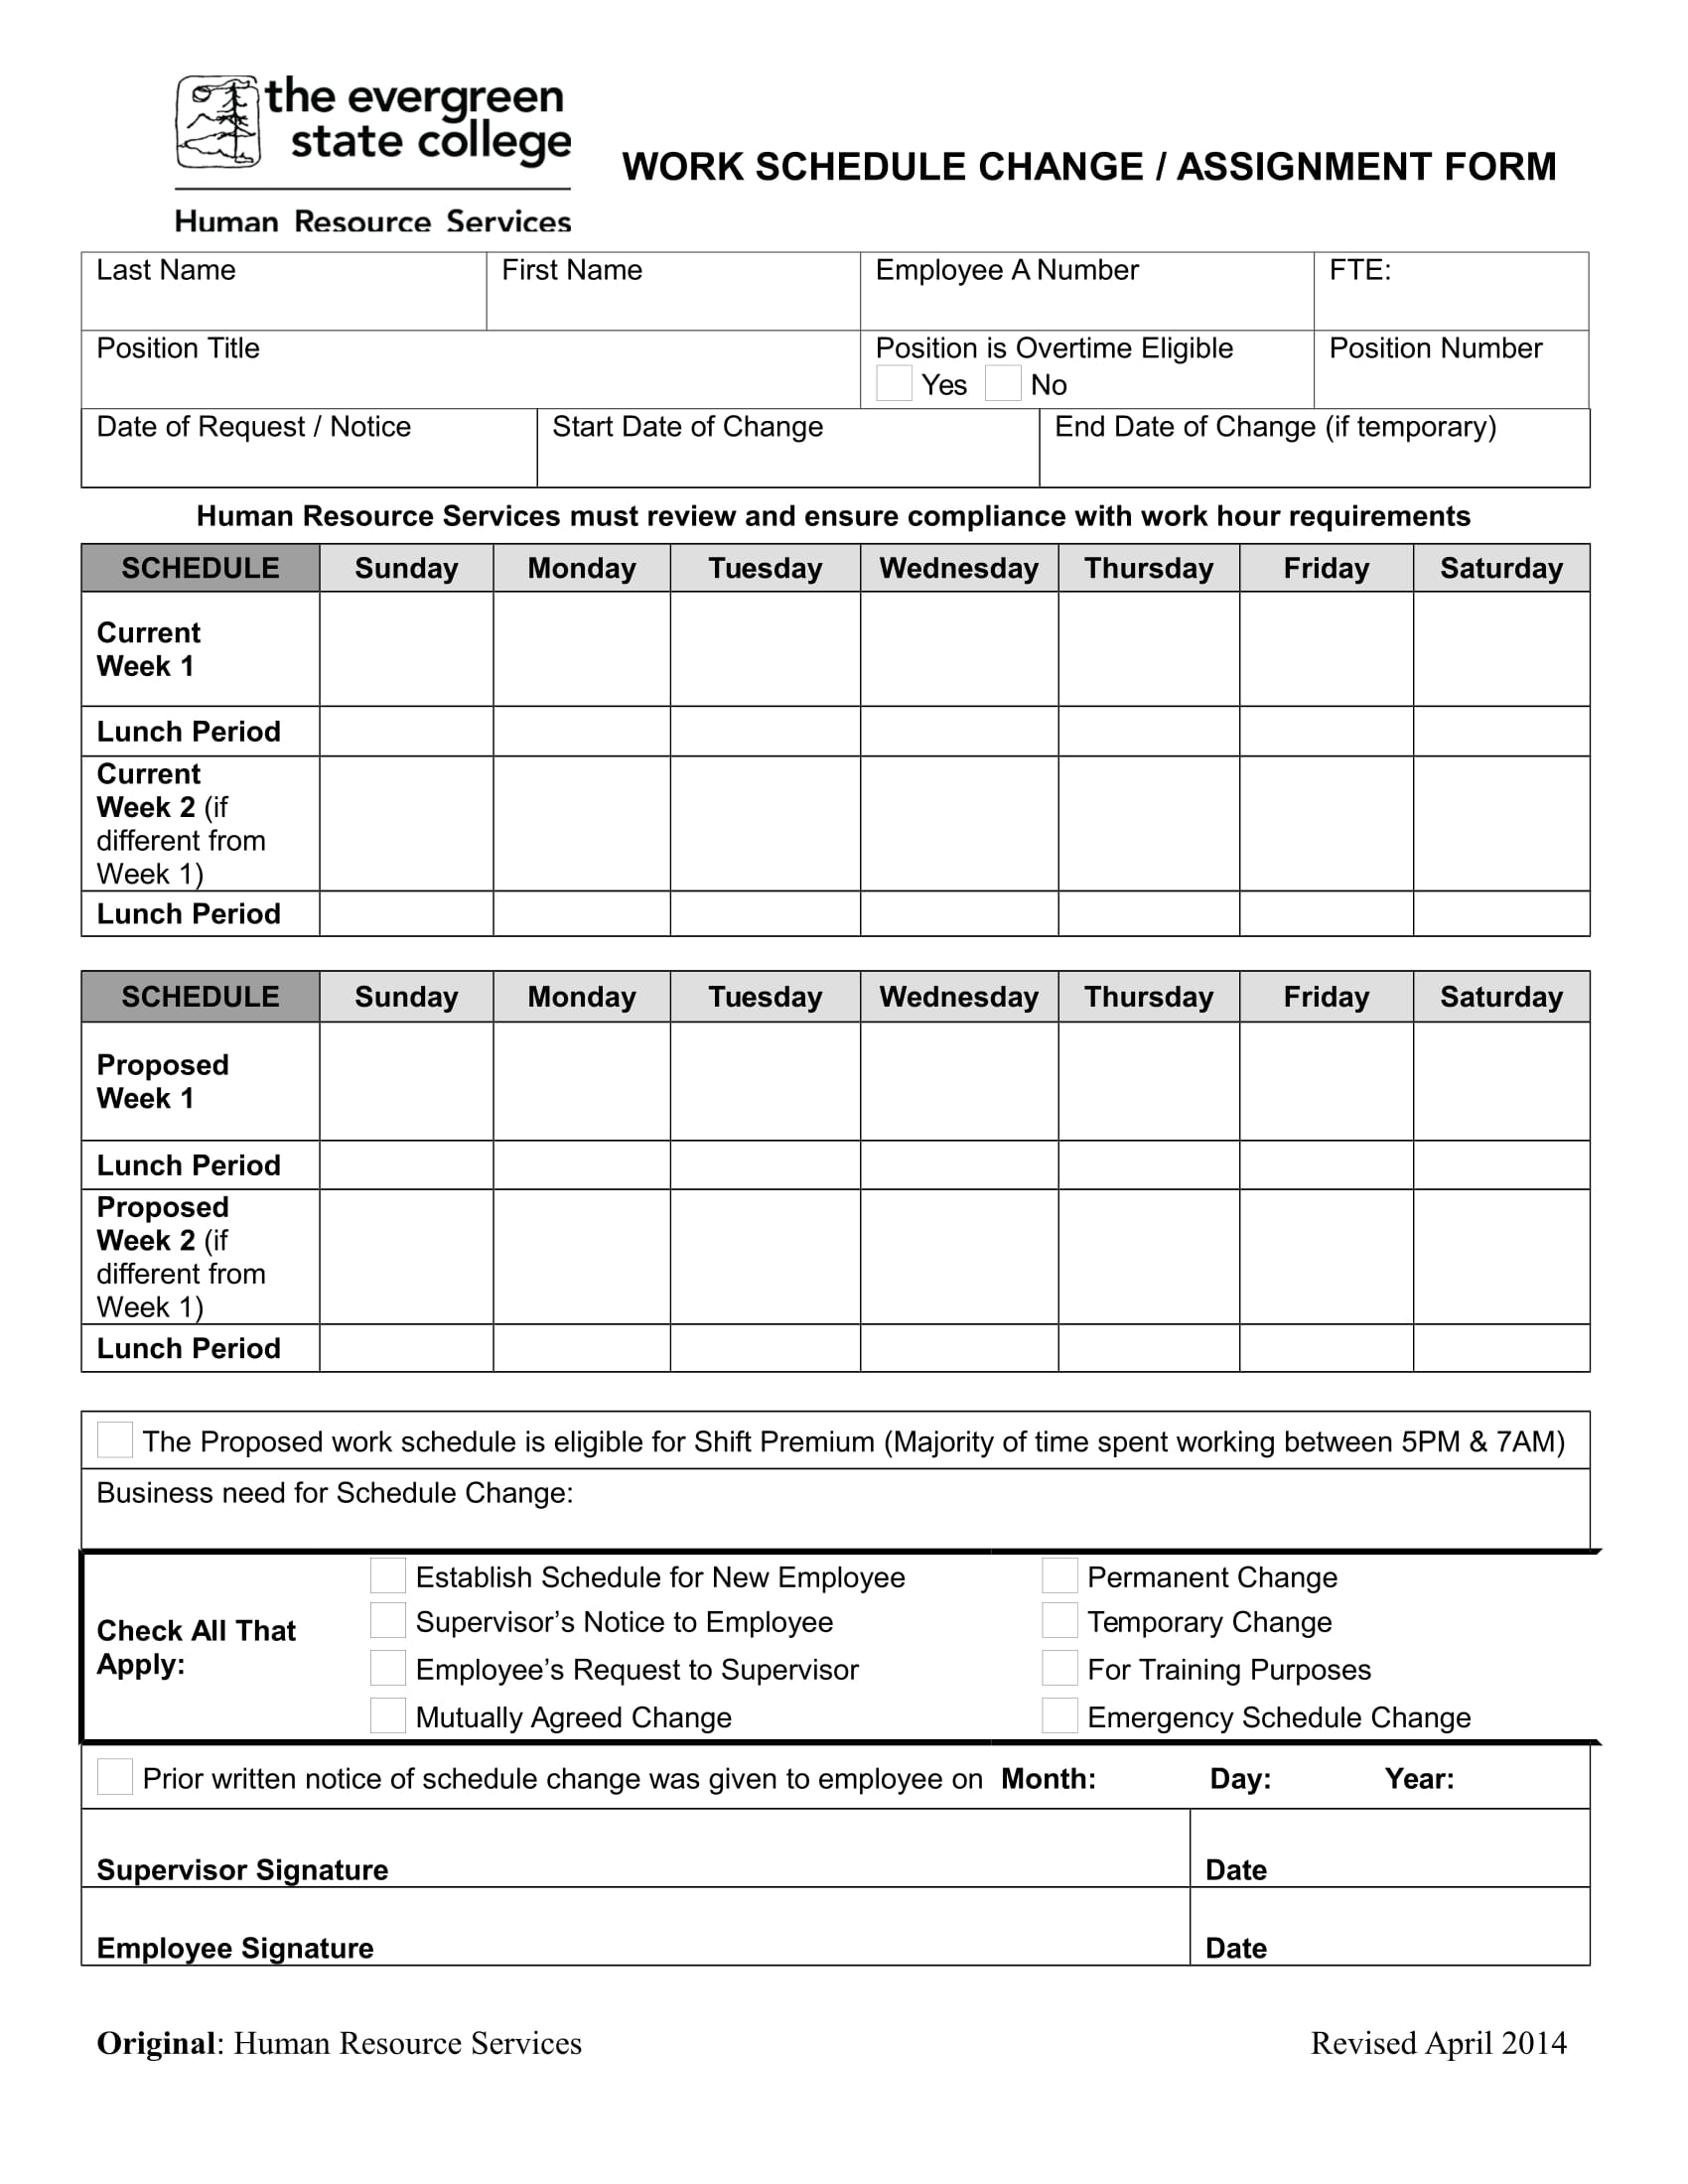 employee work schedule change form 1